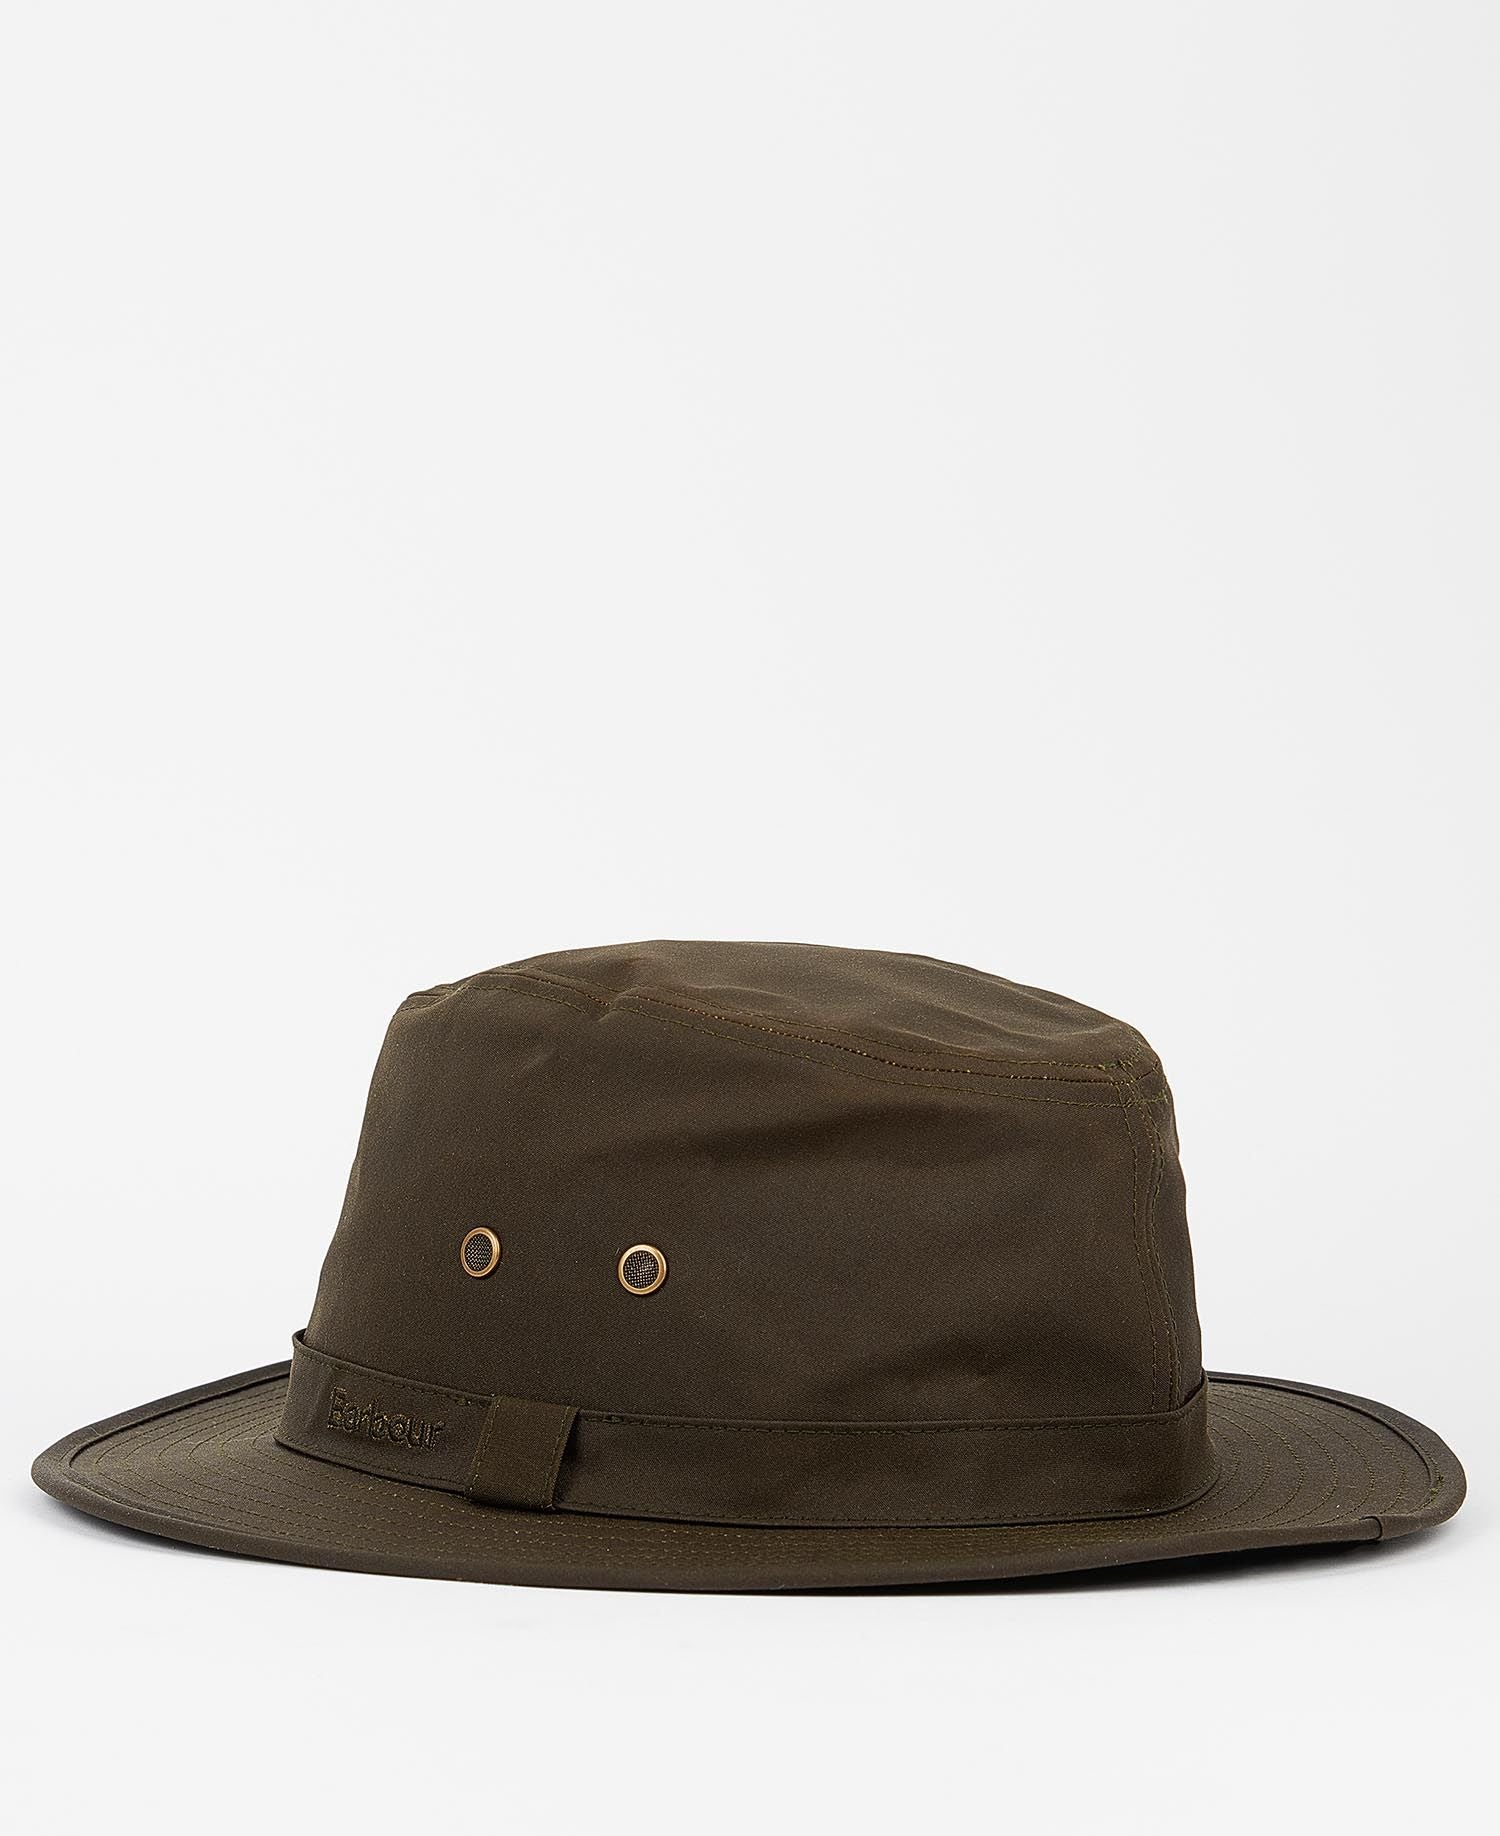 Dawson Wax Safari Hat - Olive